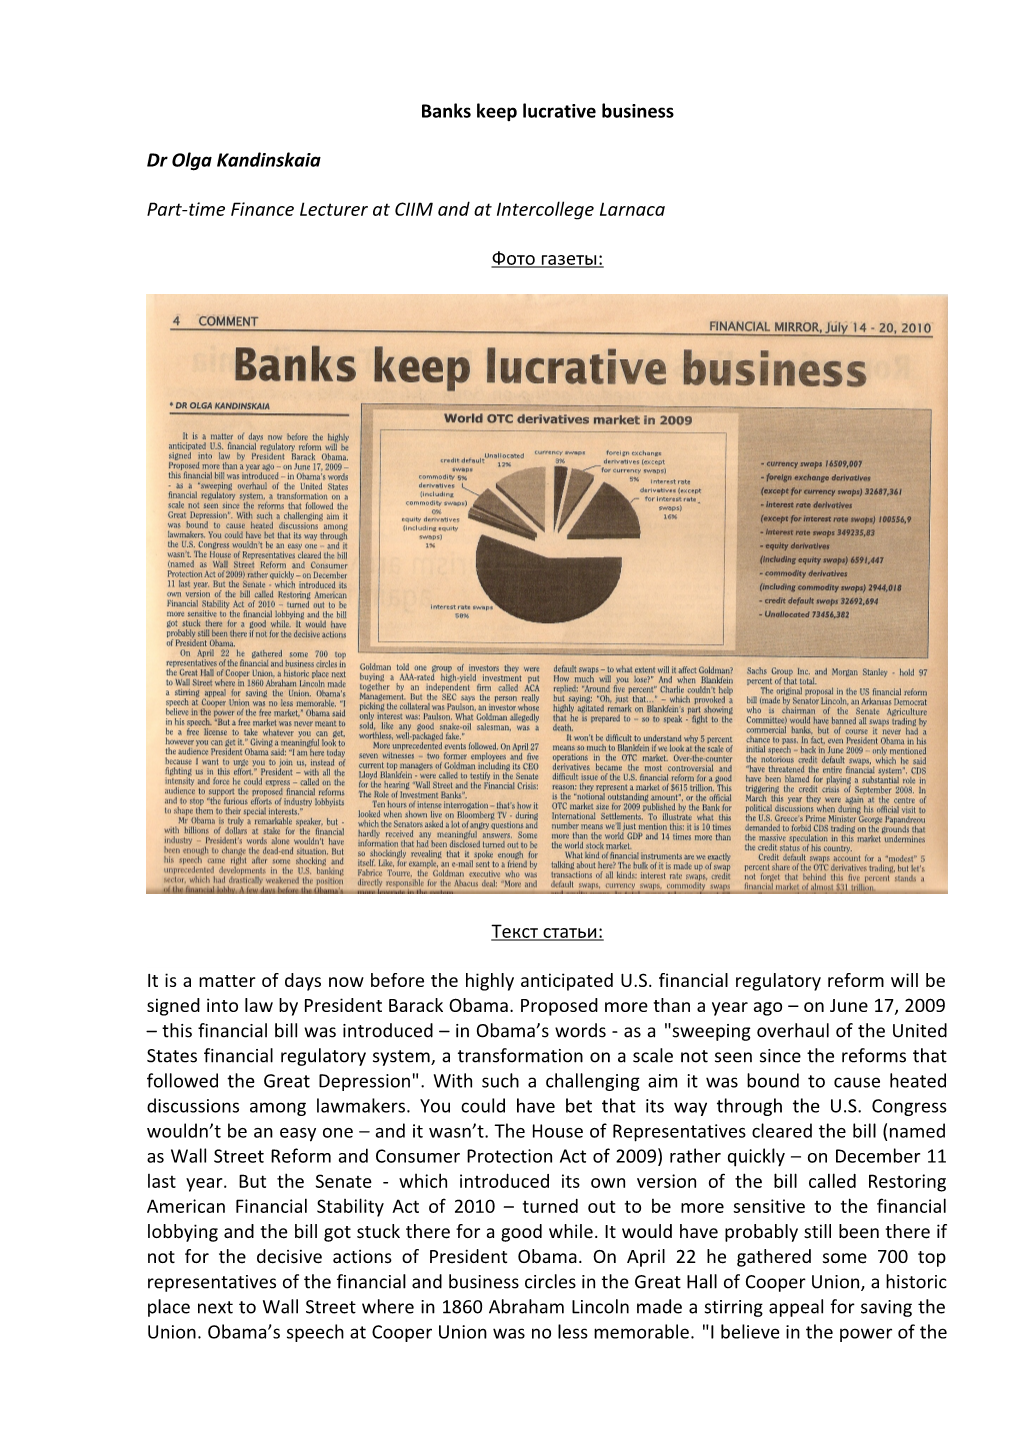 Banks Keep Lucrative Business